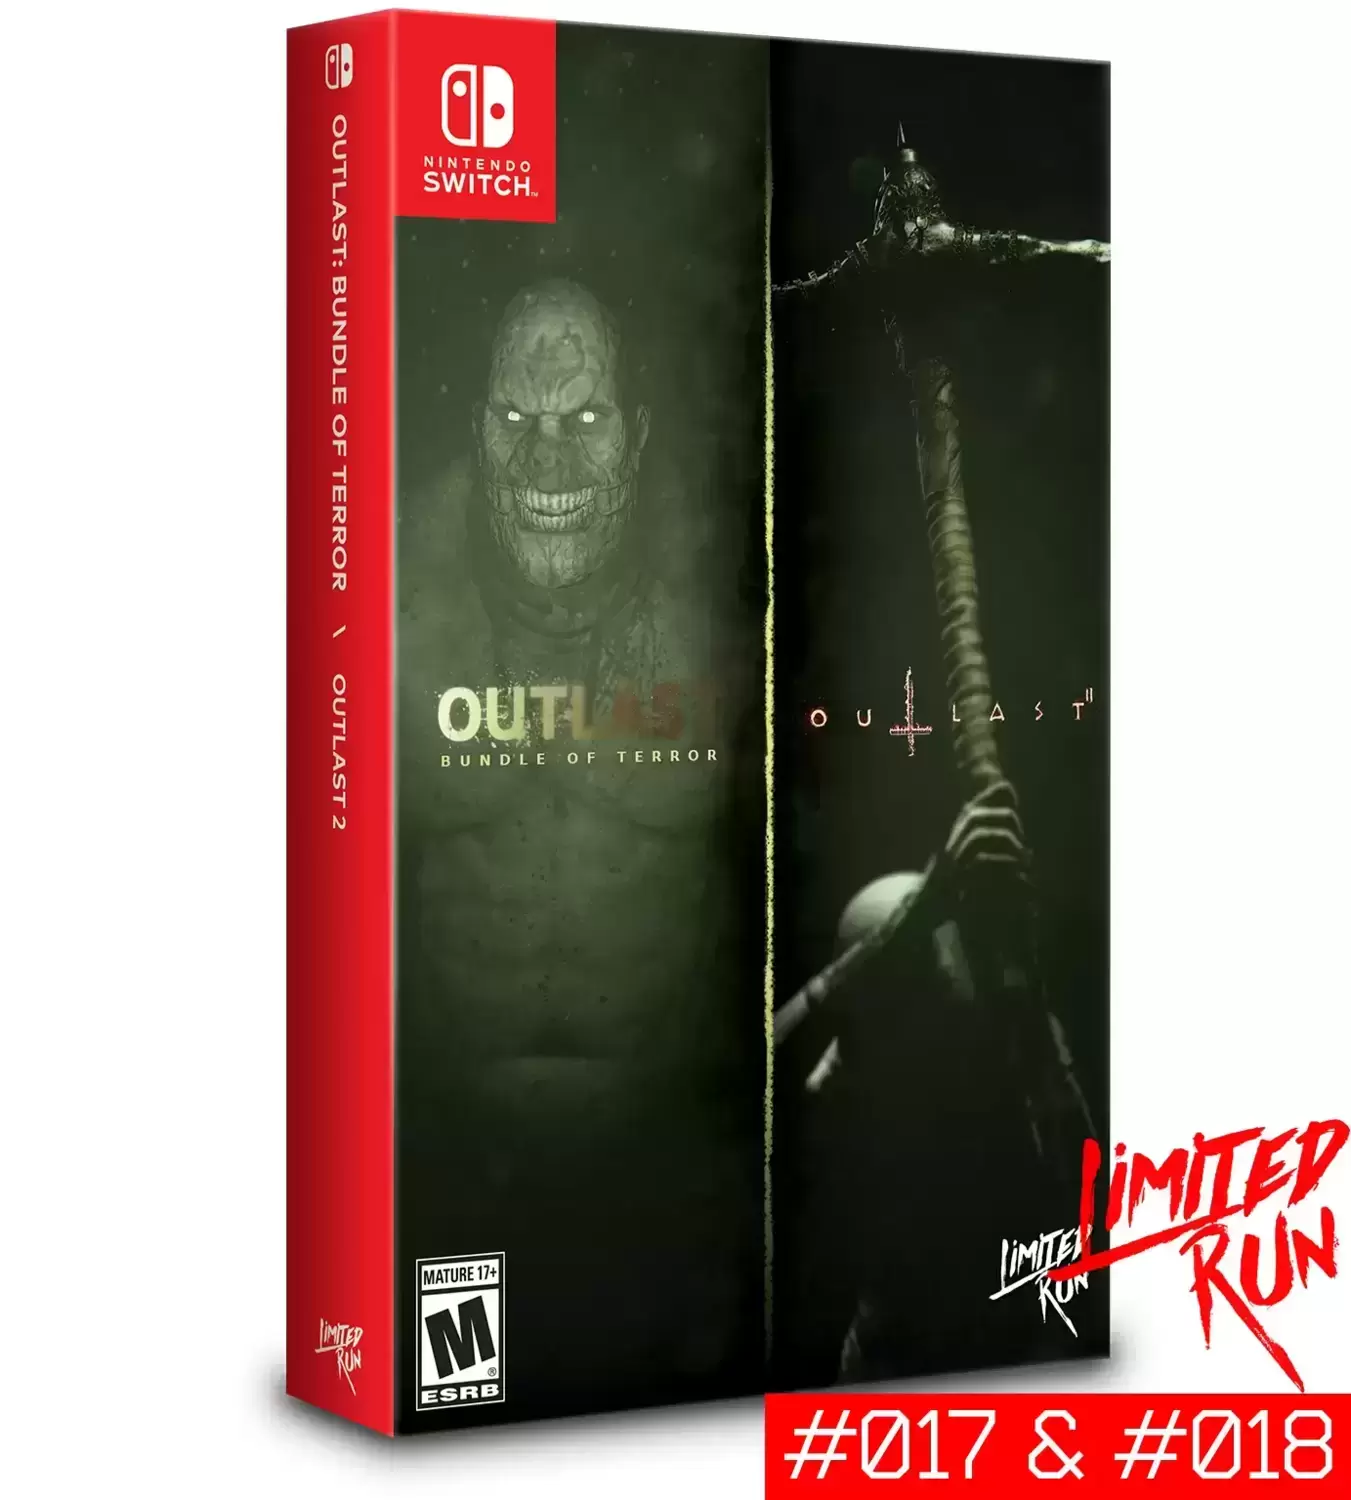 Jeux Nintendo Switch - Outlast & Outlast II Bundle Of Terror Limited Run Games #017 & #018